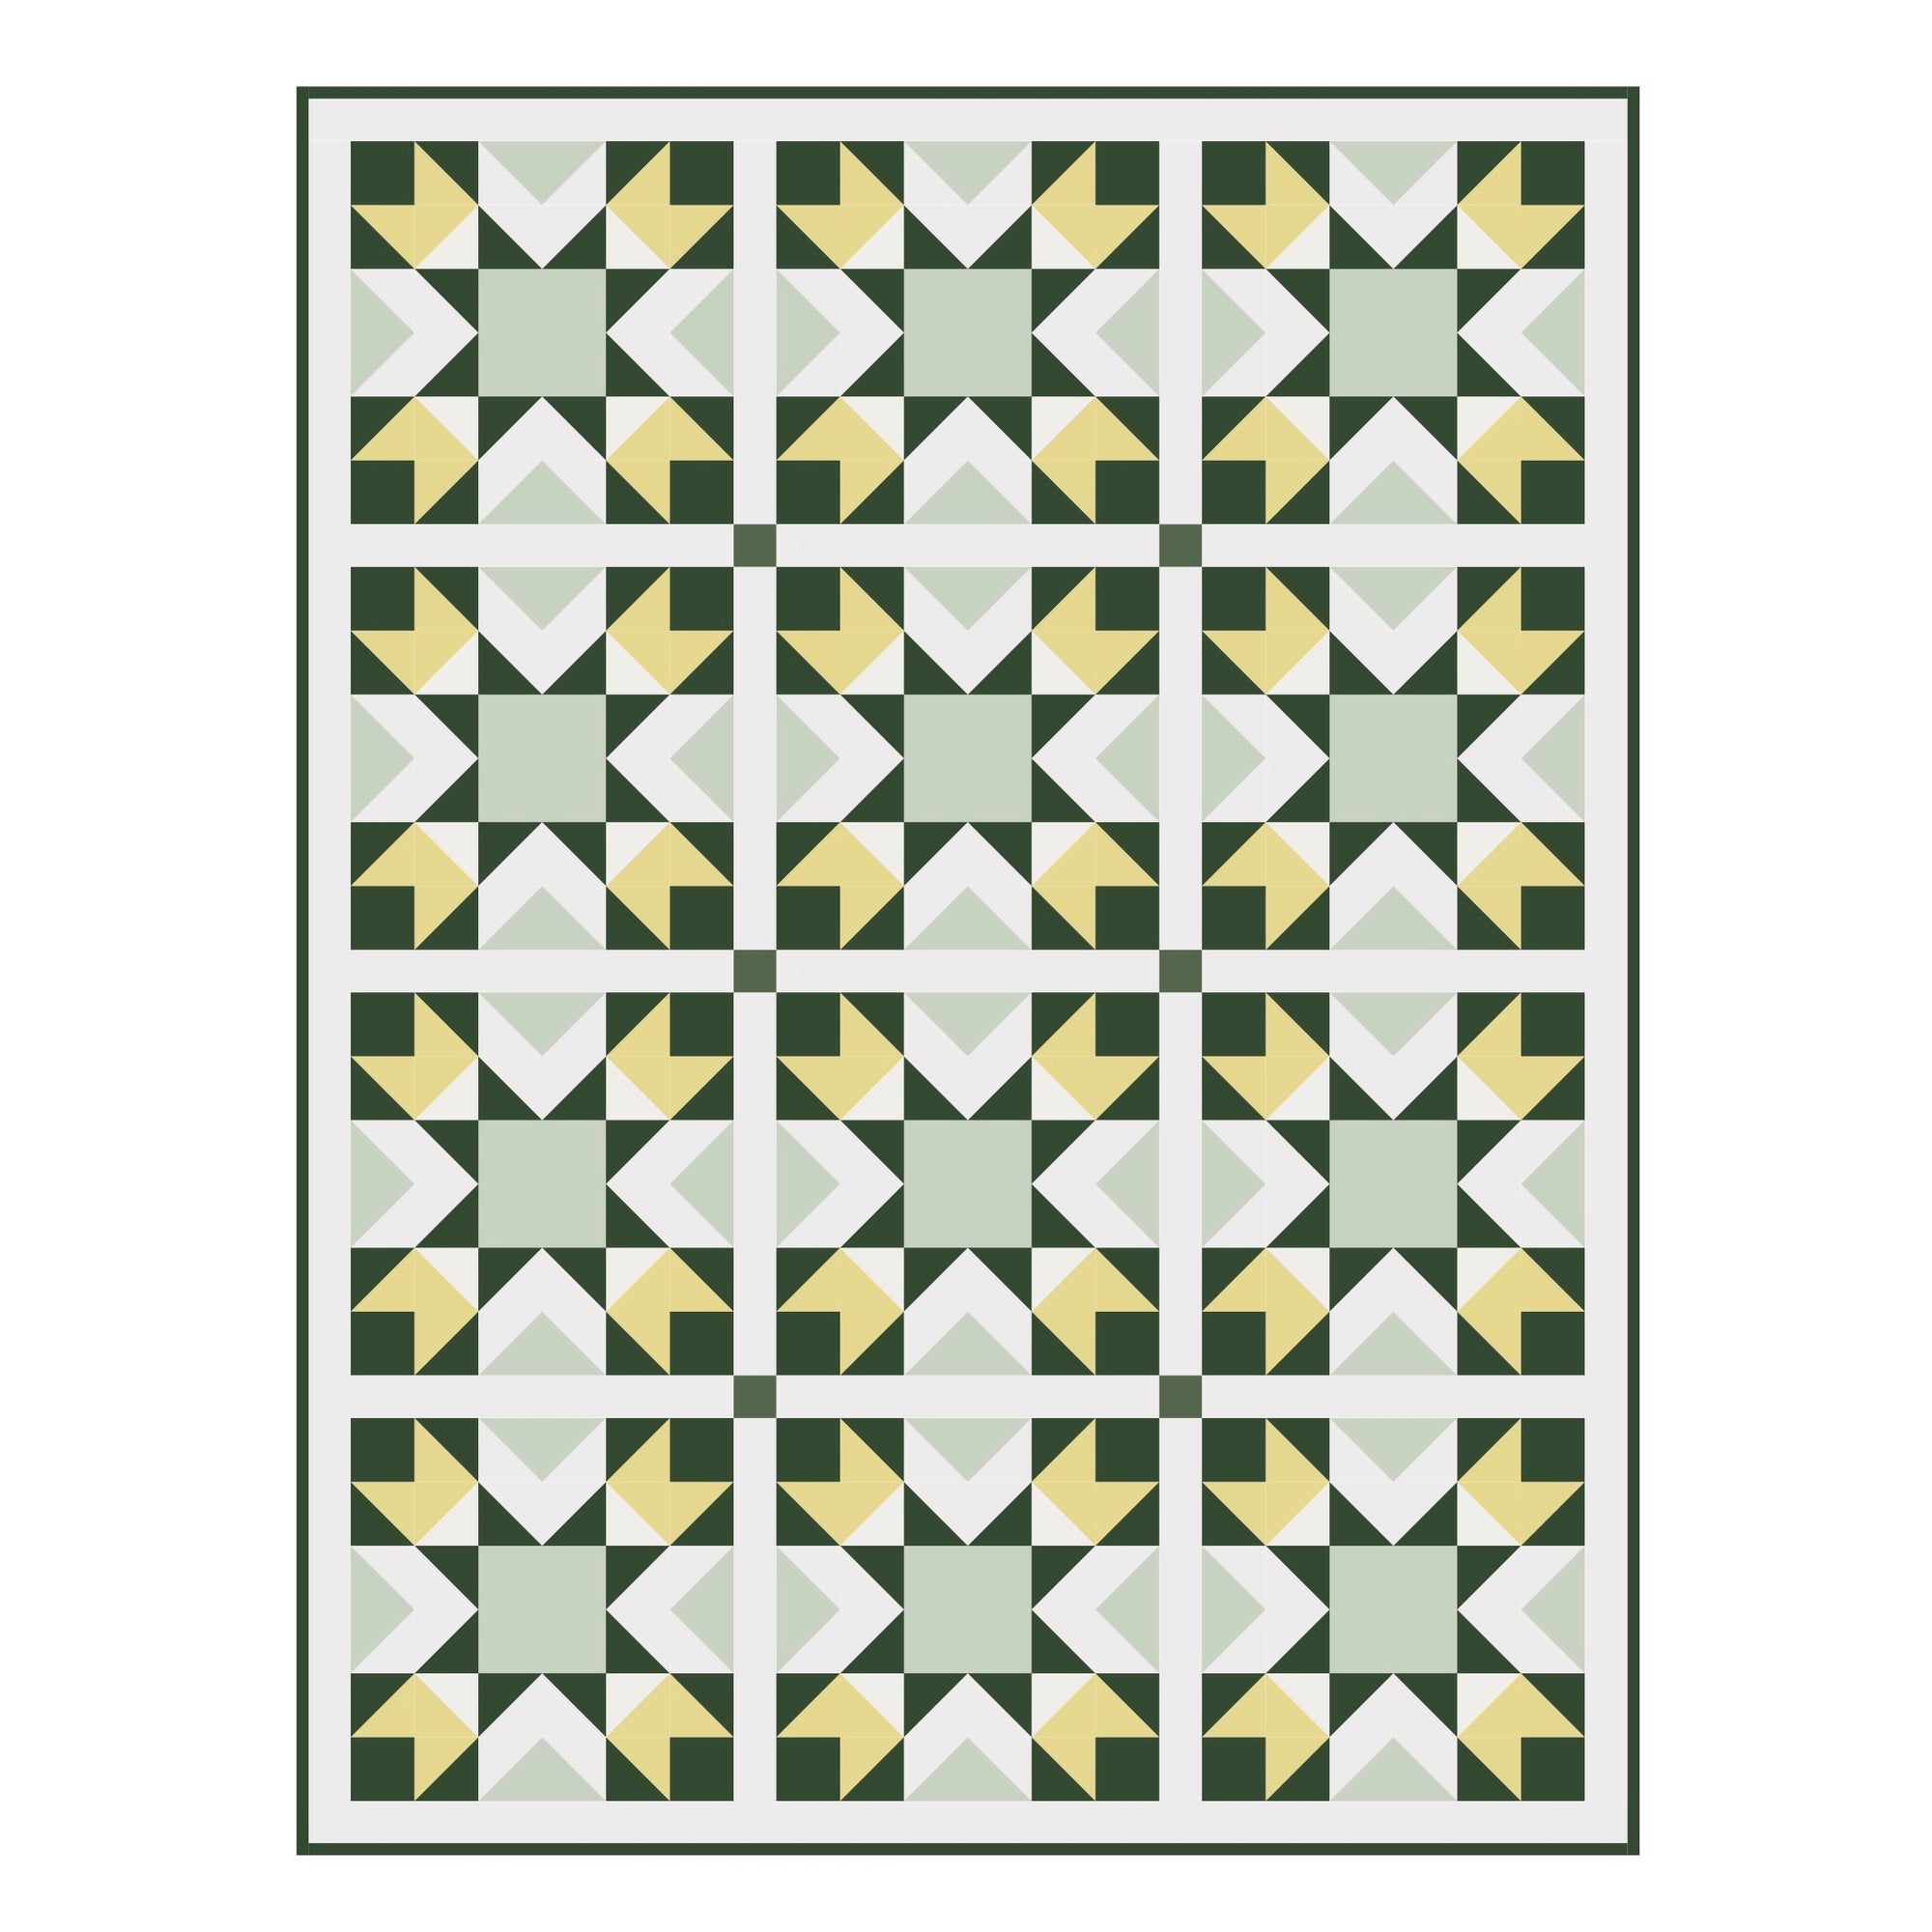 Louisa - Quilt Pattern Details - PDF